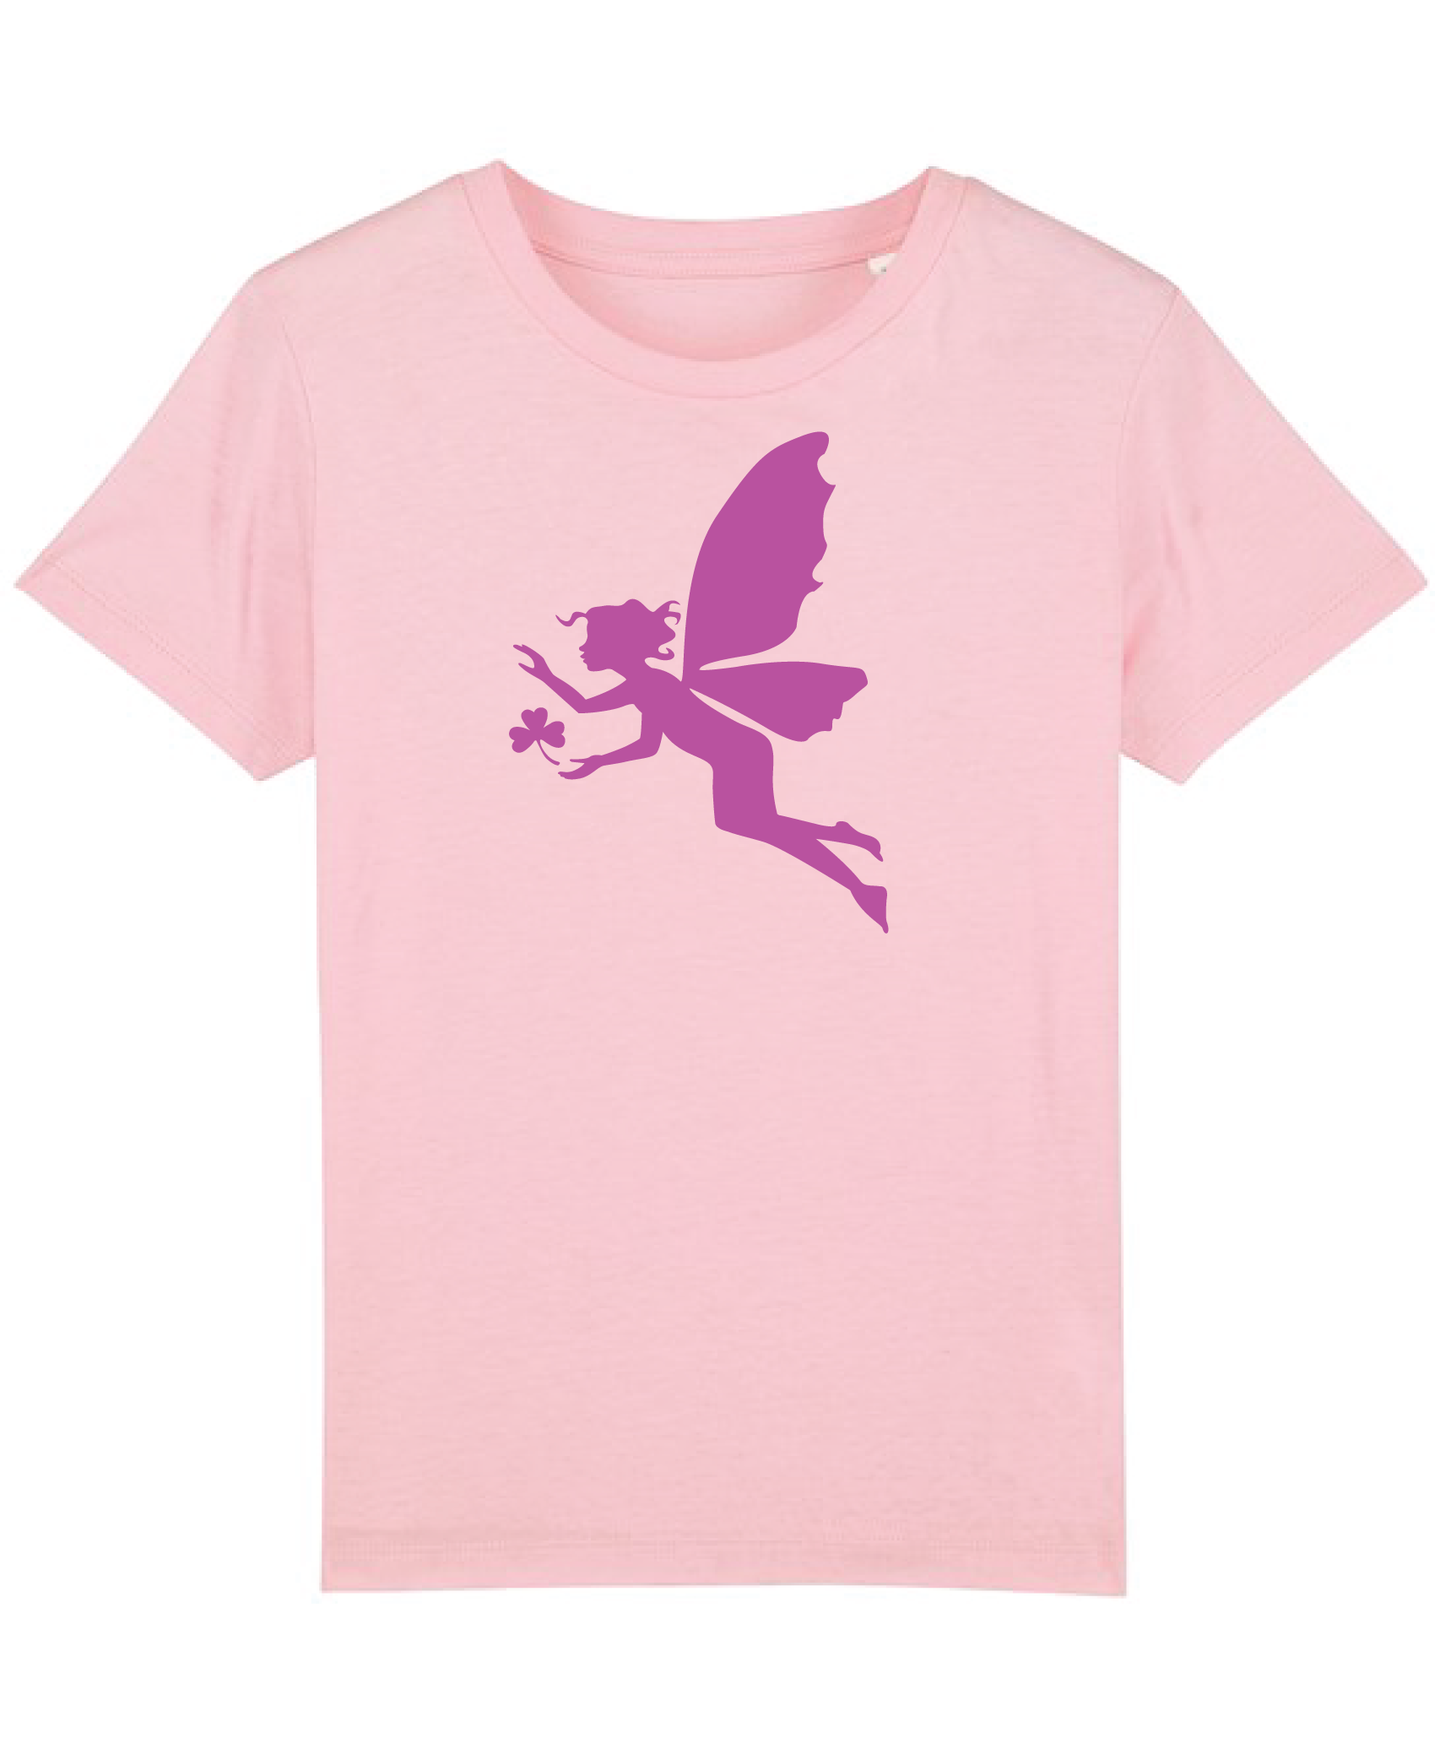 Girls New Pink Organic tee shirt with Fairy flock print.